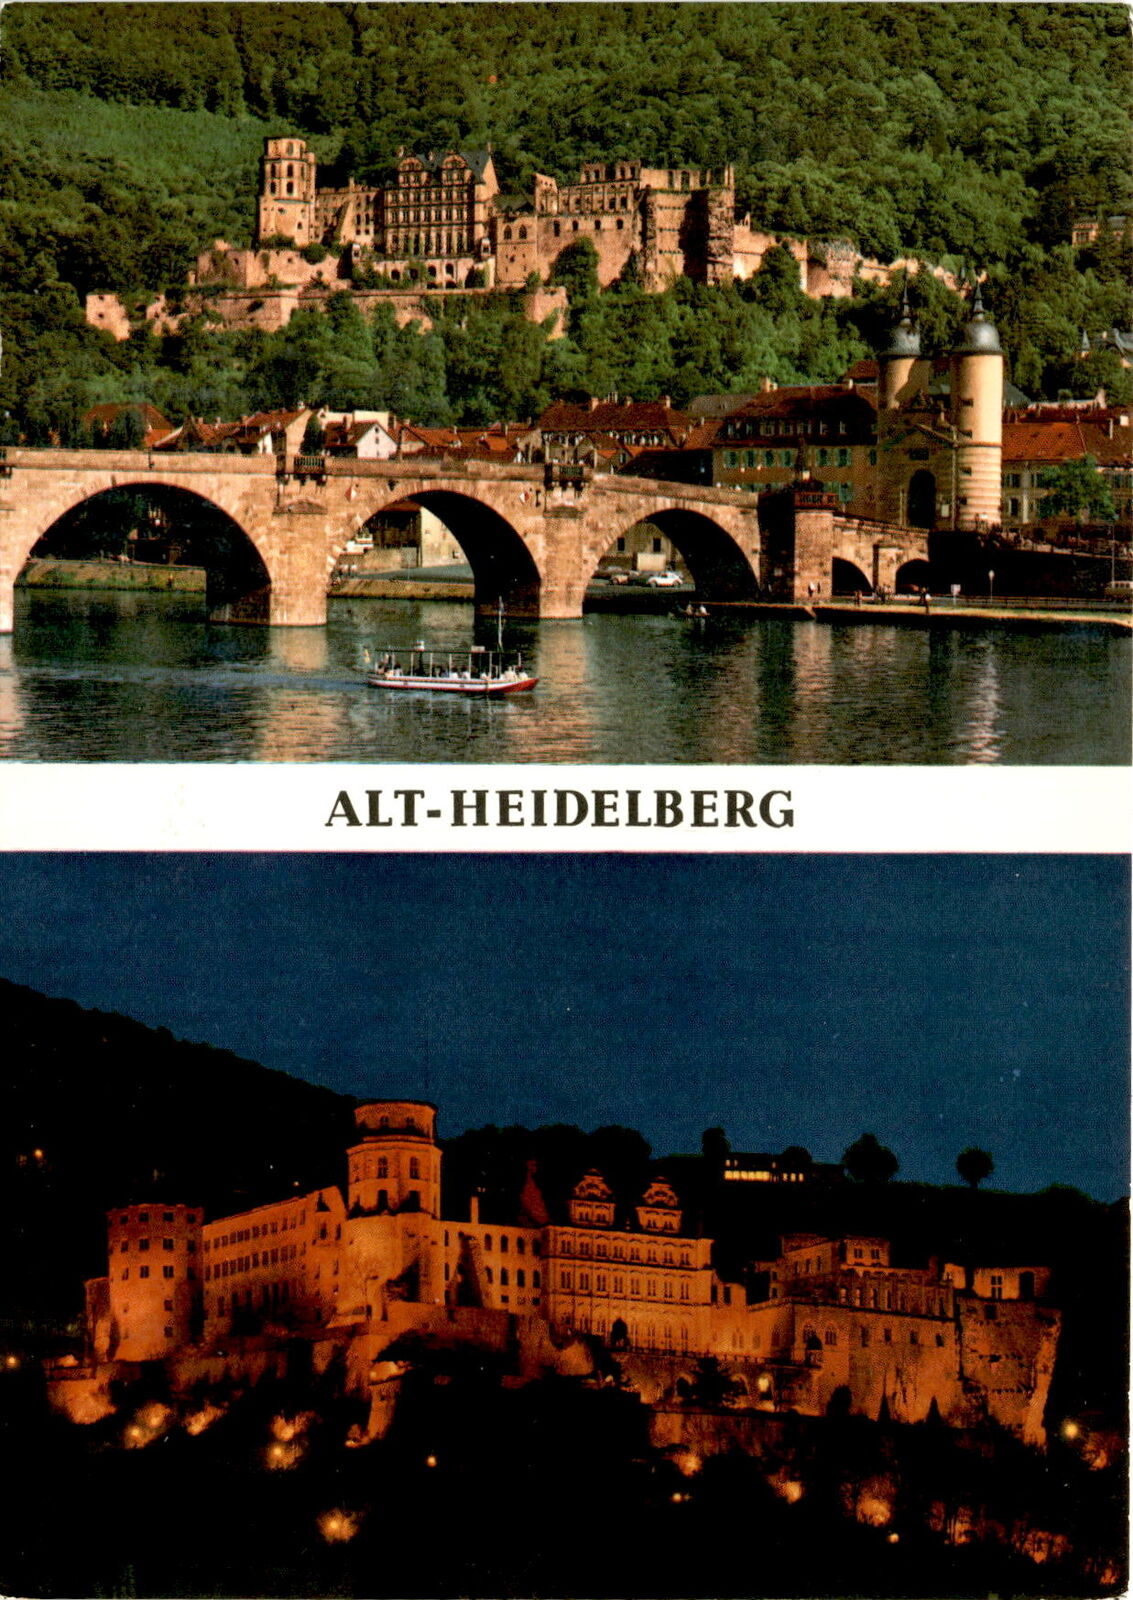 Heidelberg, Germany, Old Bridge, Castle, F. Gärtner, Photographer, Postcard